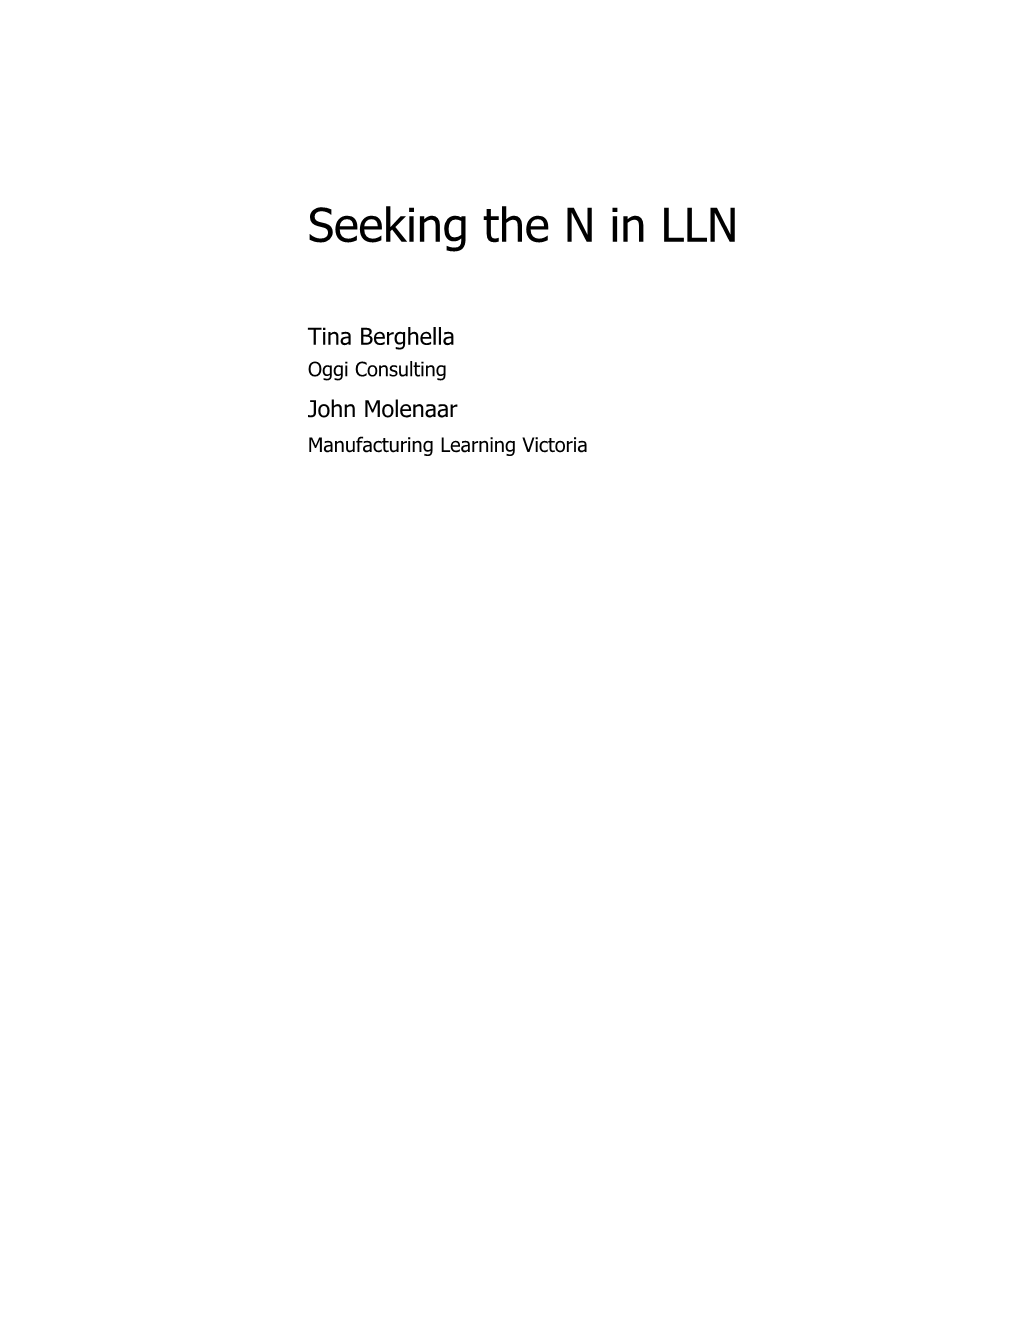 Seeking the N in LLN: Support Document